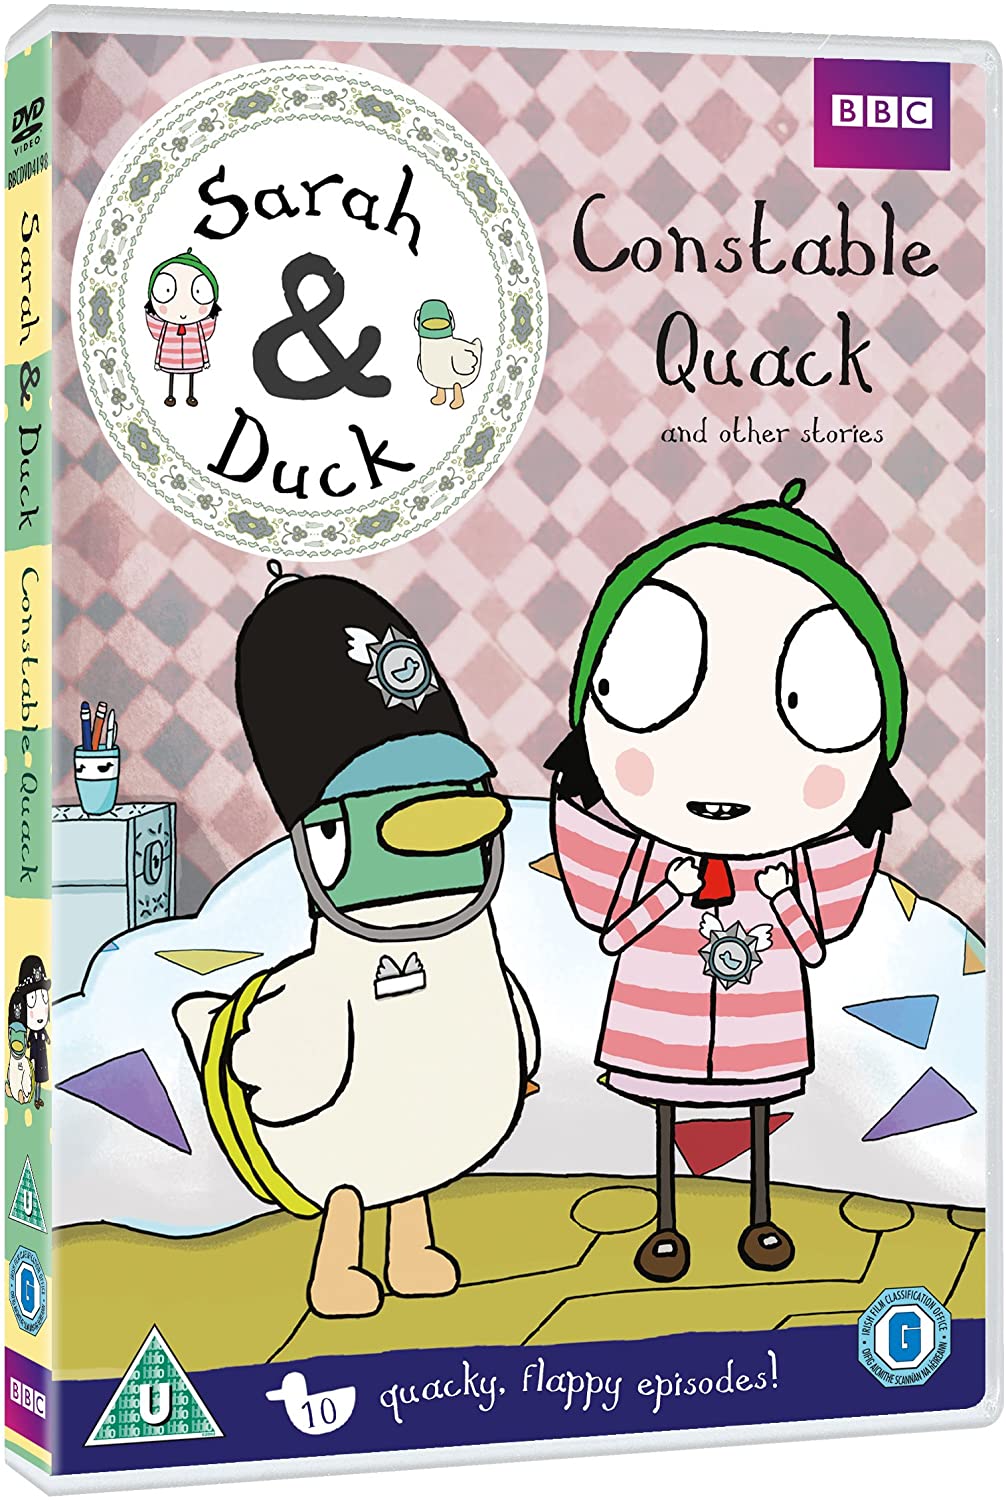 Sarah &amp; Duck – Constable Quack [2017] – Animation [DVD]